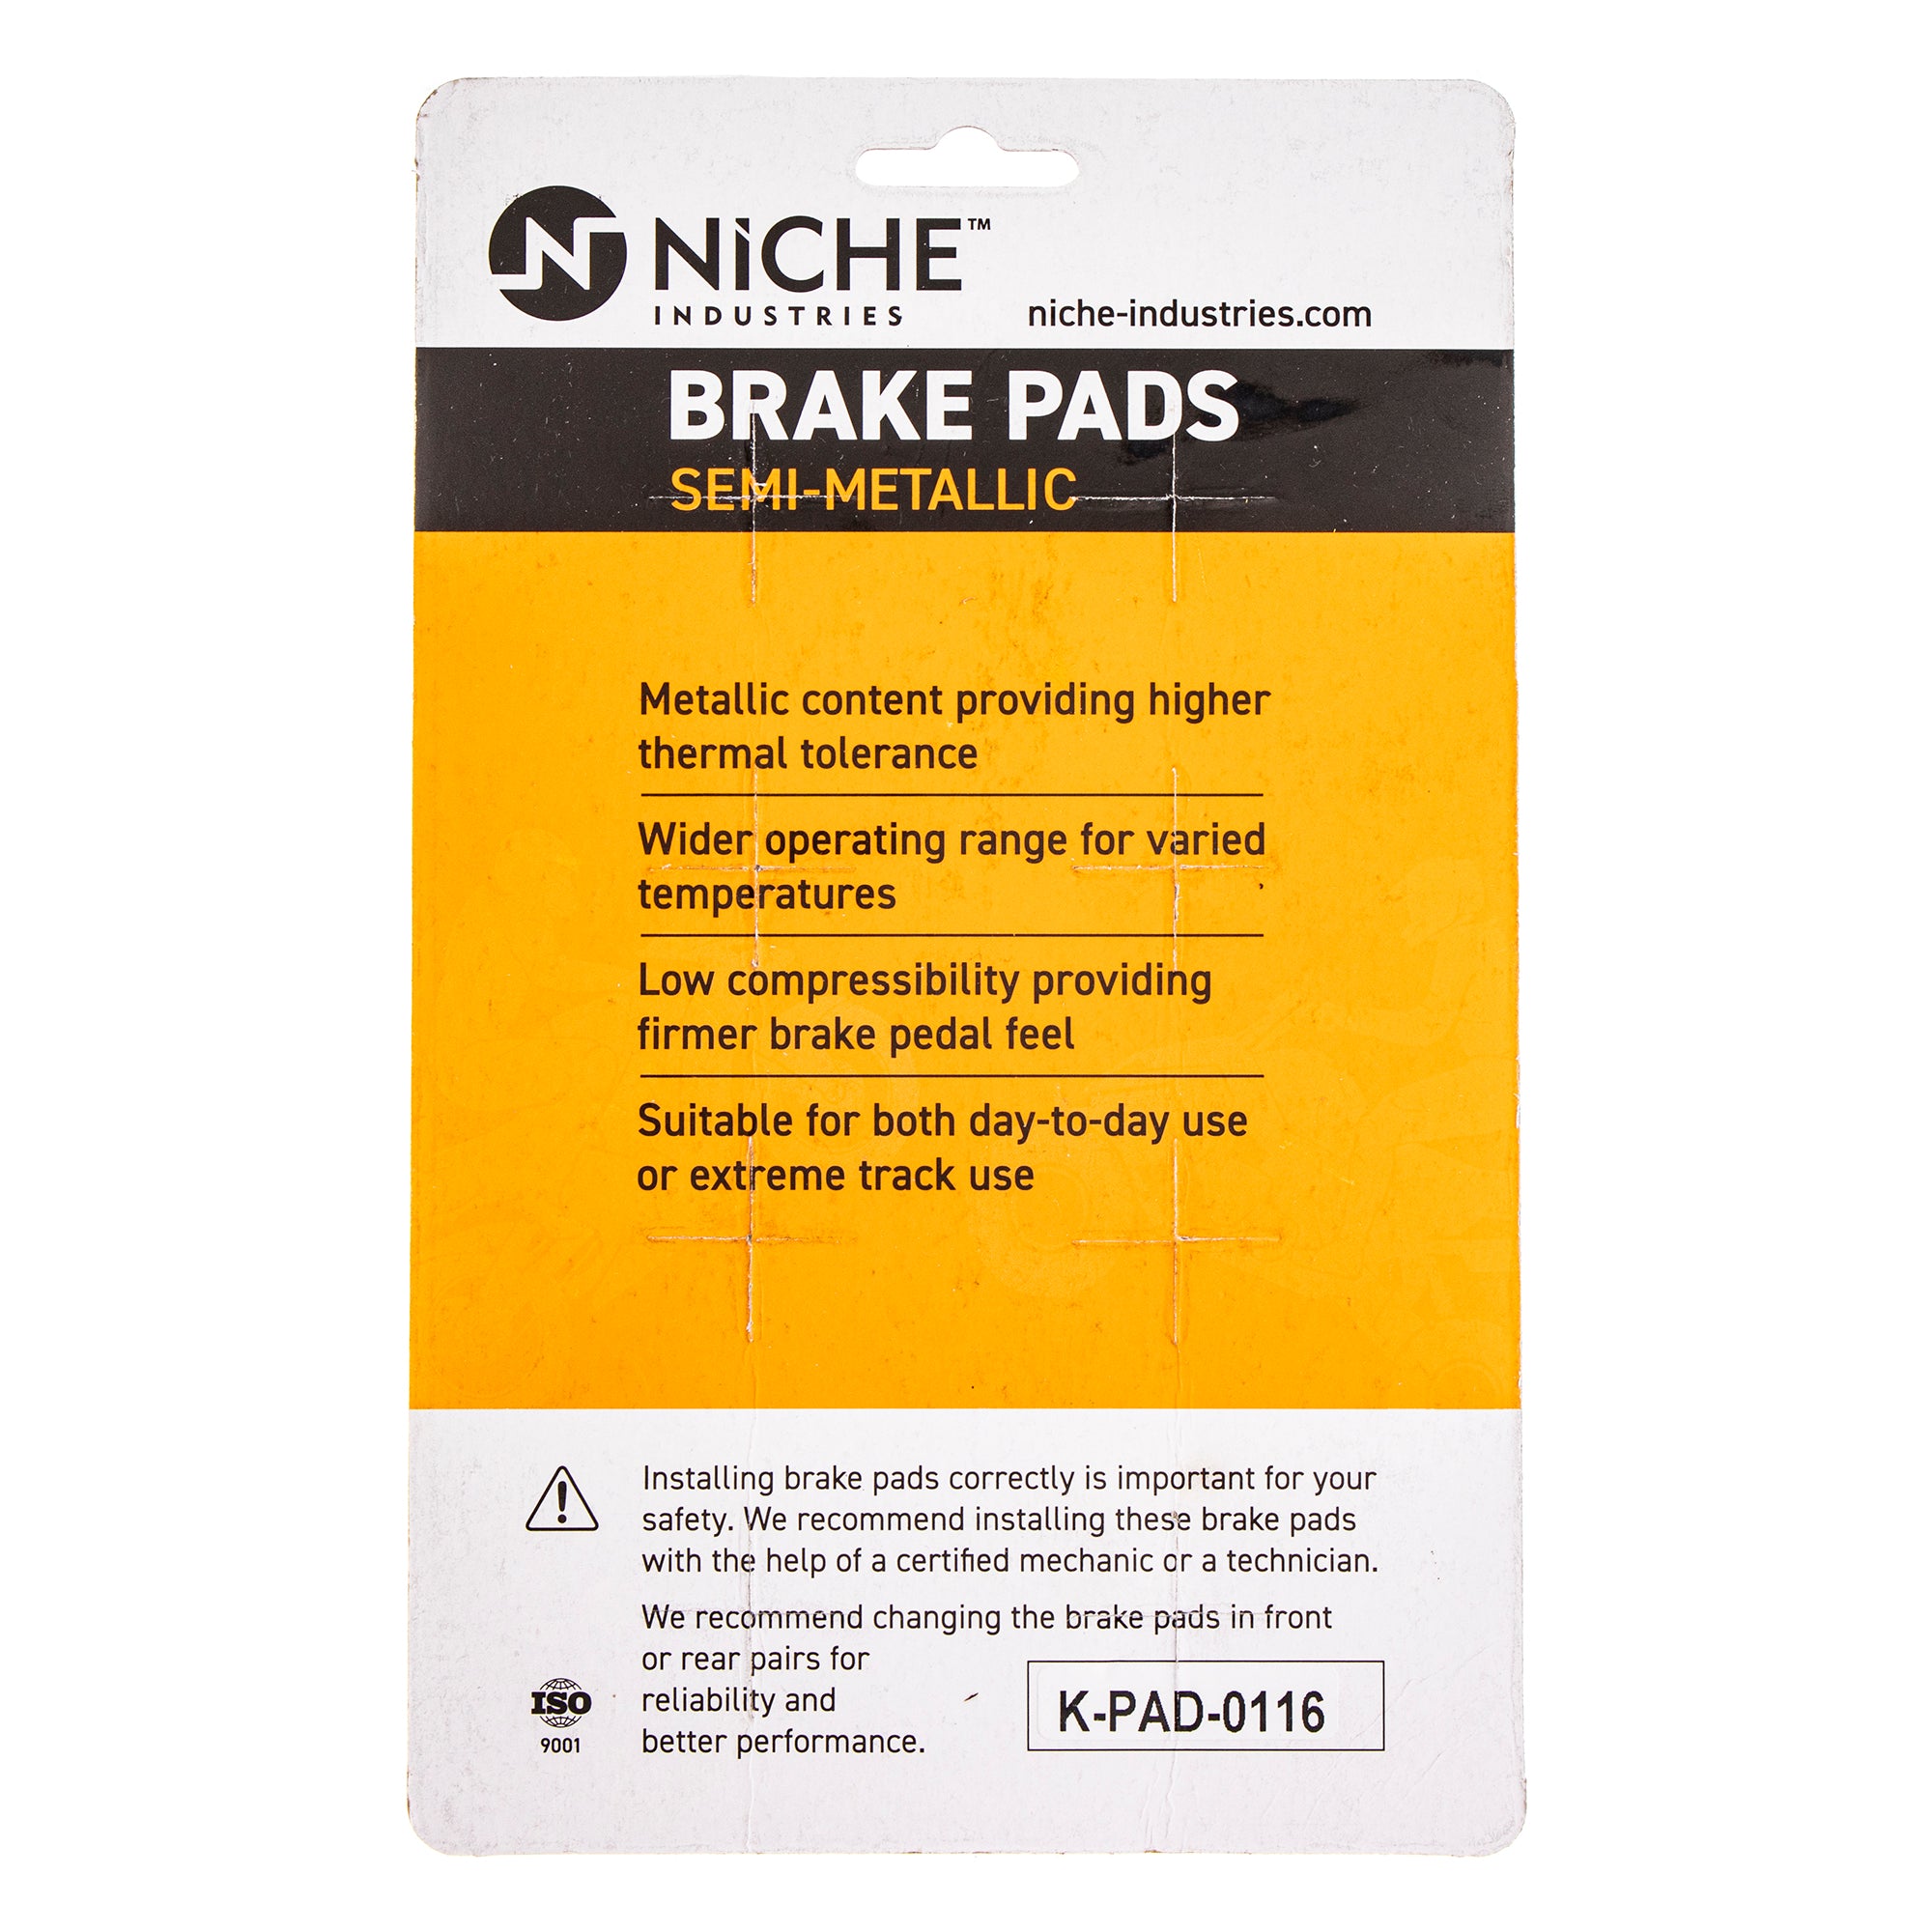 NICHE 519-KPA2338D Semi-Metallic Brake Pads for Arctic Cat Textron